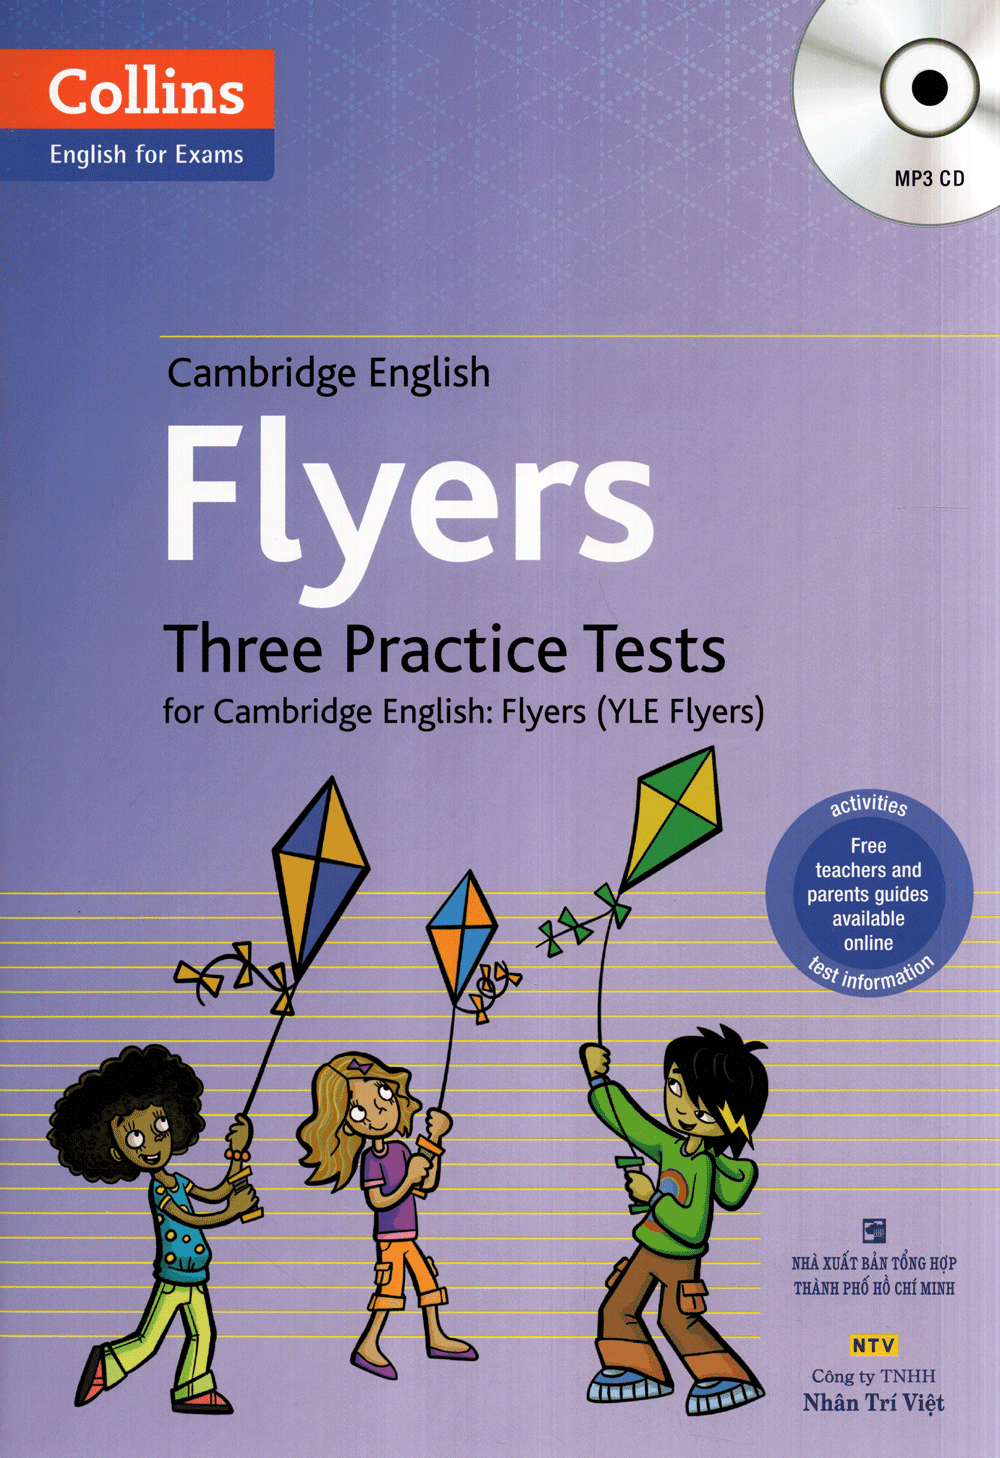 Collins - English For Exams - Cambridge English Flyers Three Practice Test (Trọn bộ 2 quyển)